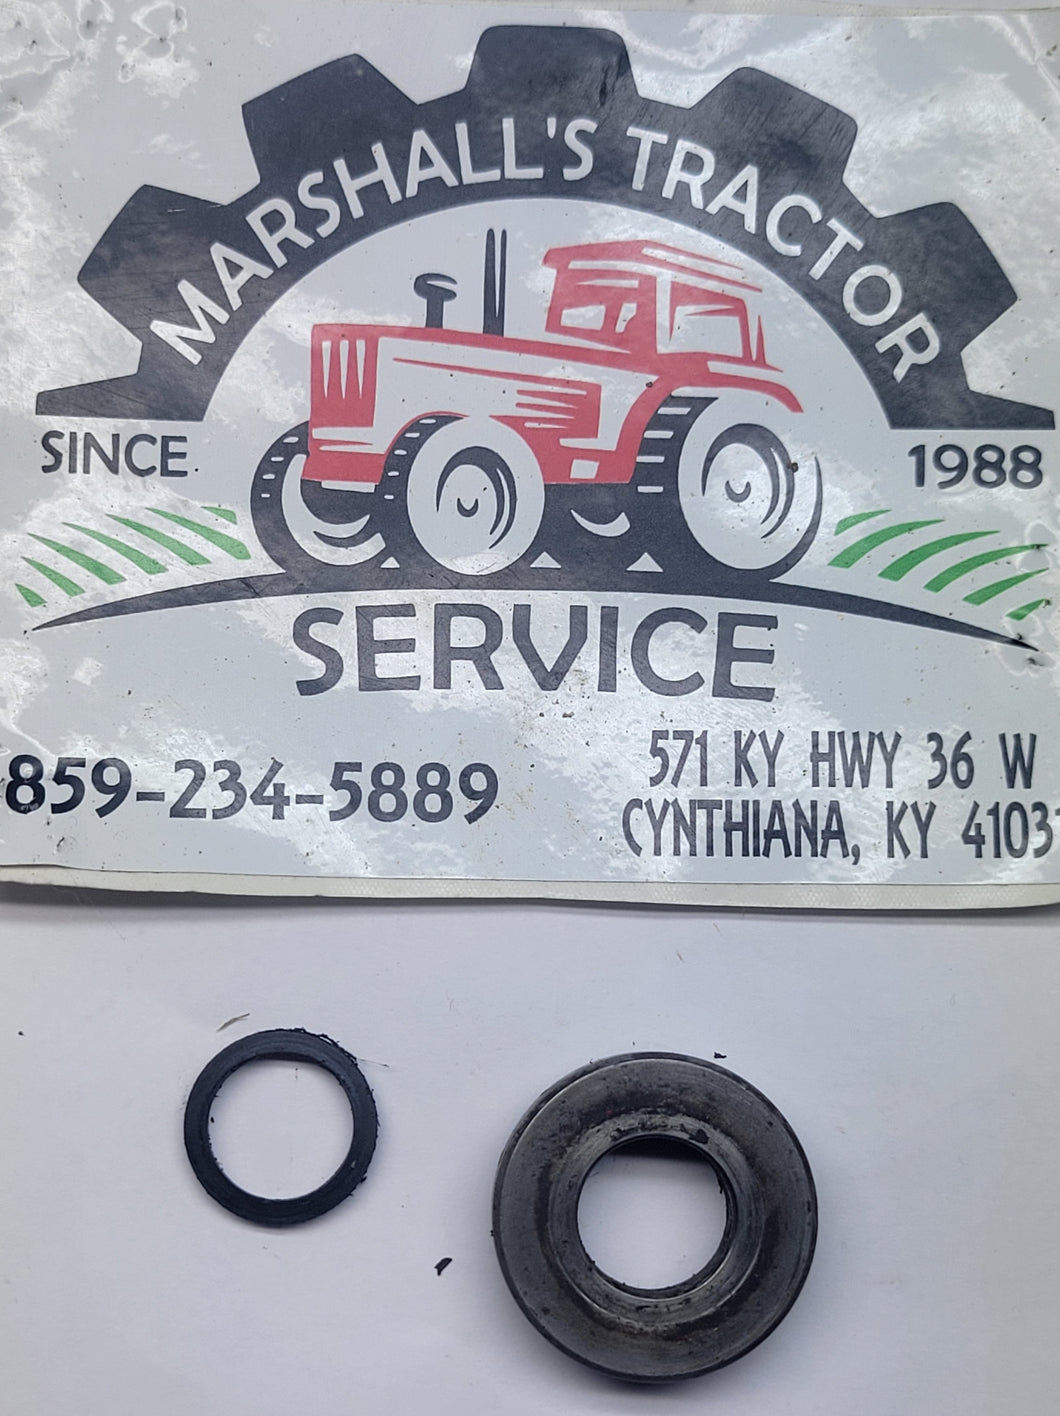 384808R2 IH Side Dresser Drive Sealing Ring Bushing. Farmall Tractor Super  100 140 140